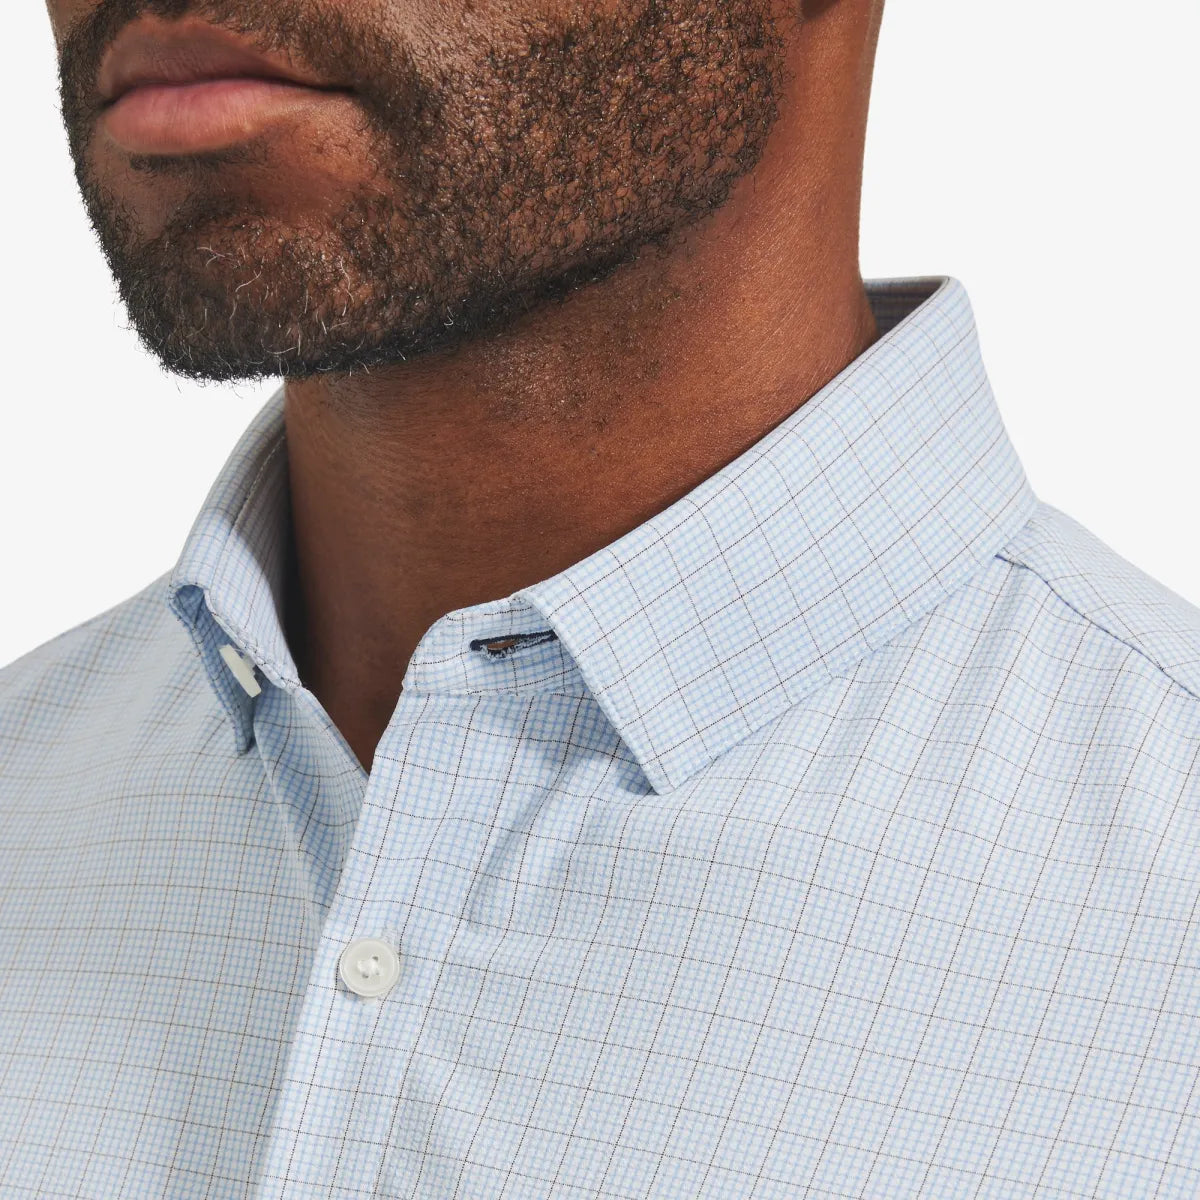 leeward shirt close up of collar